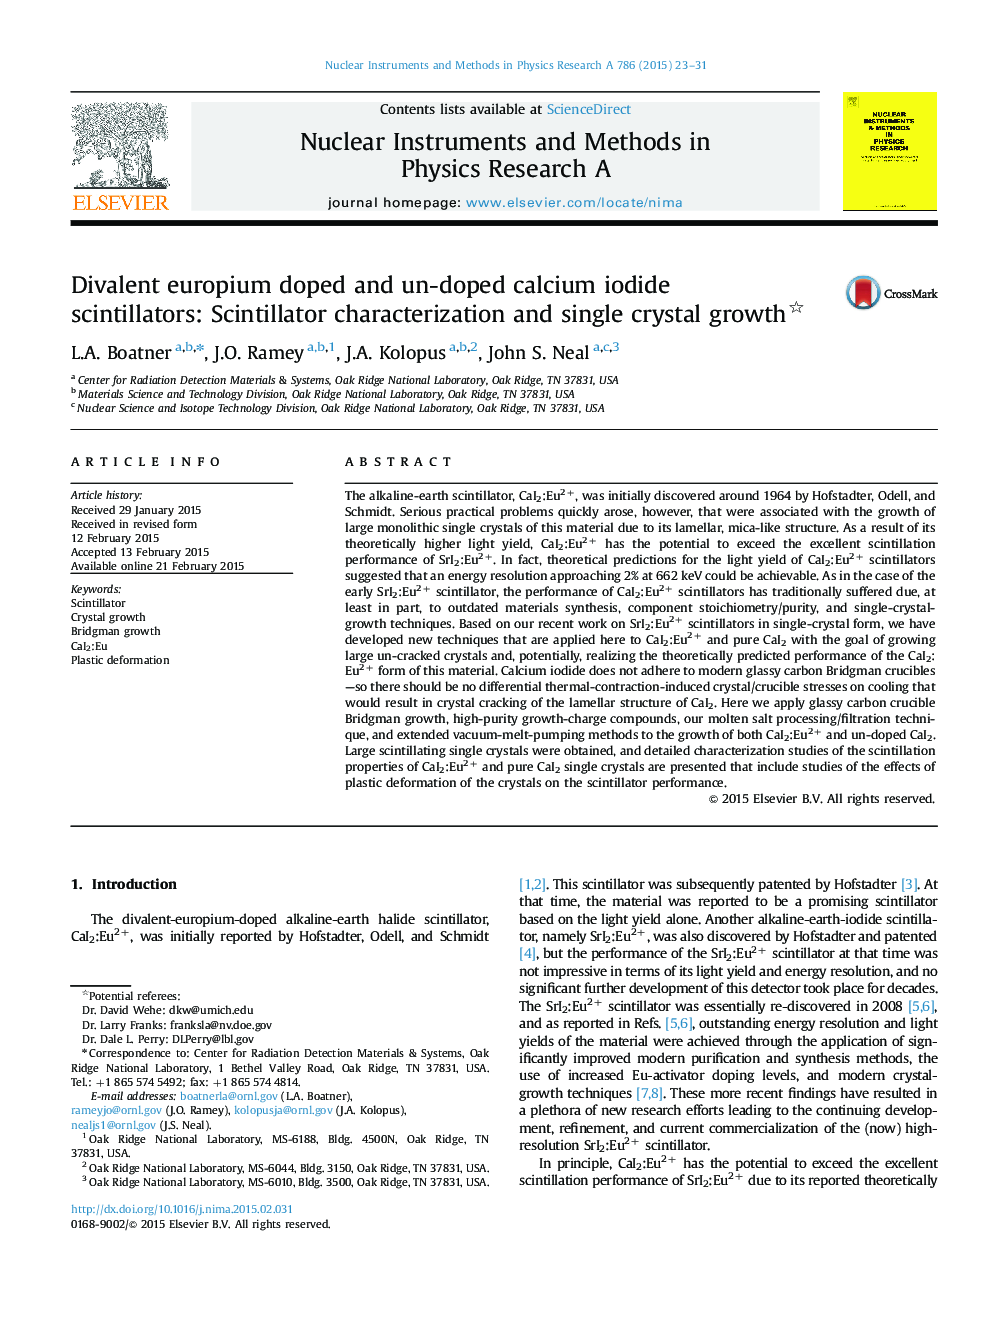 Divalent europium doped and un-doped calcium iodide scintillators: Scintillator characterization and single crystal growth